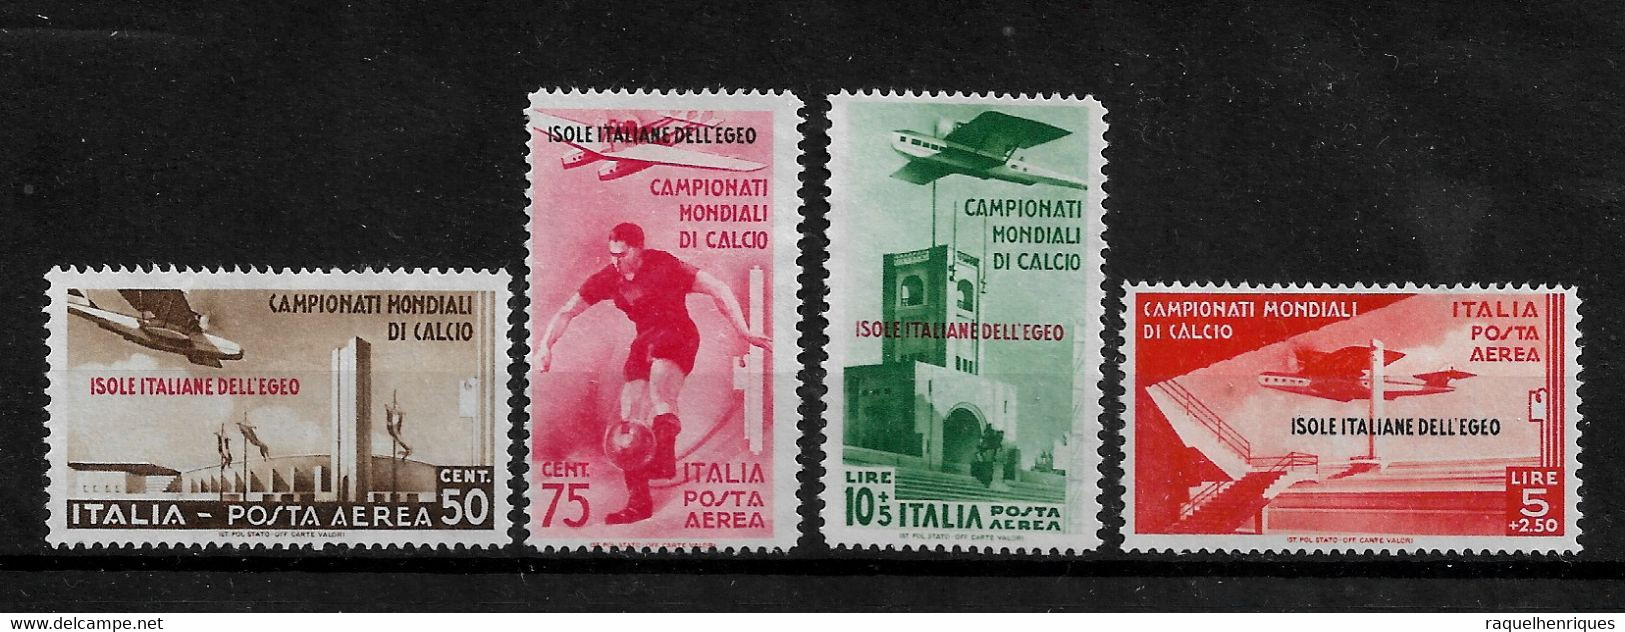 ITALY STAMP - AEGEAN ISLANDS - 1934 Airmail - Football World Cup SET M NG (BA5#108) - Aegean (Autonomous Adm.)